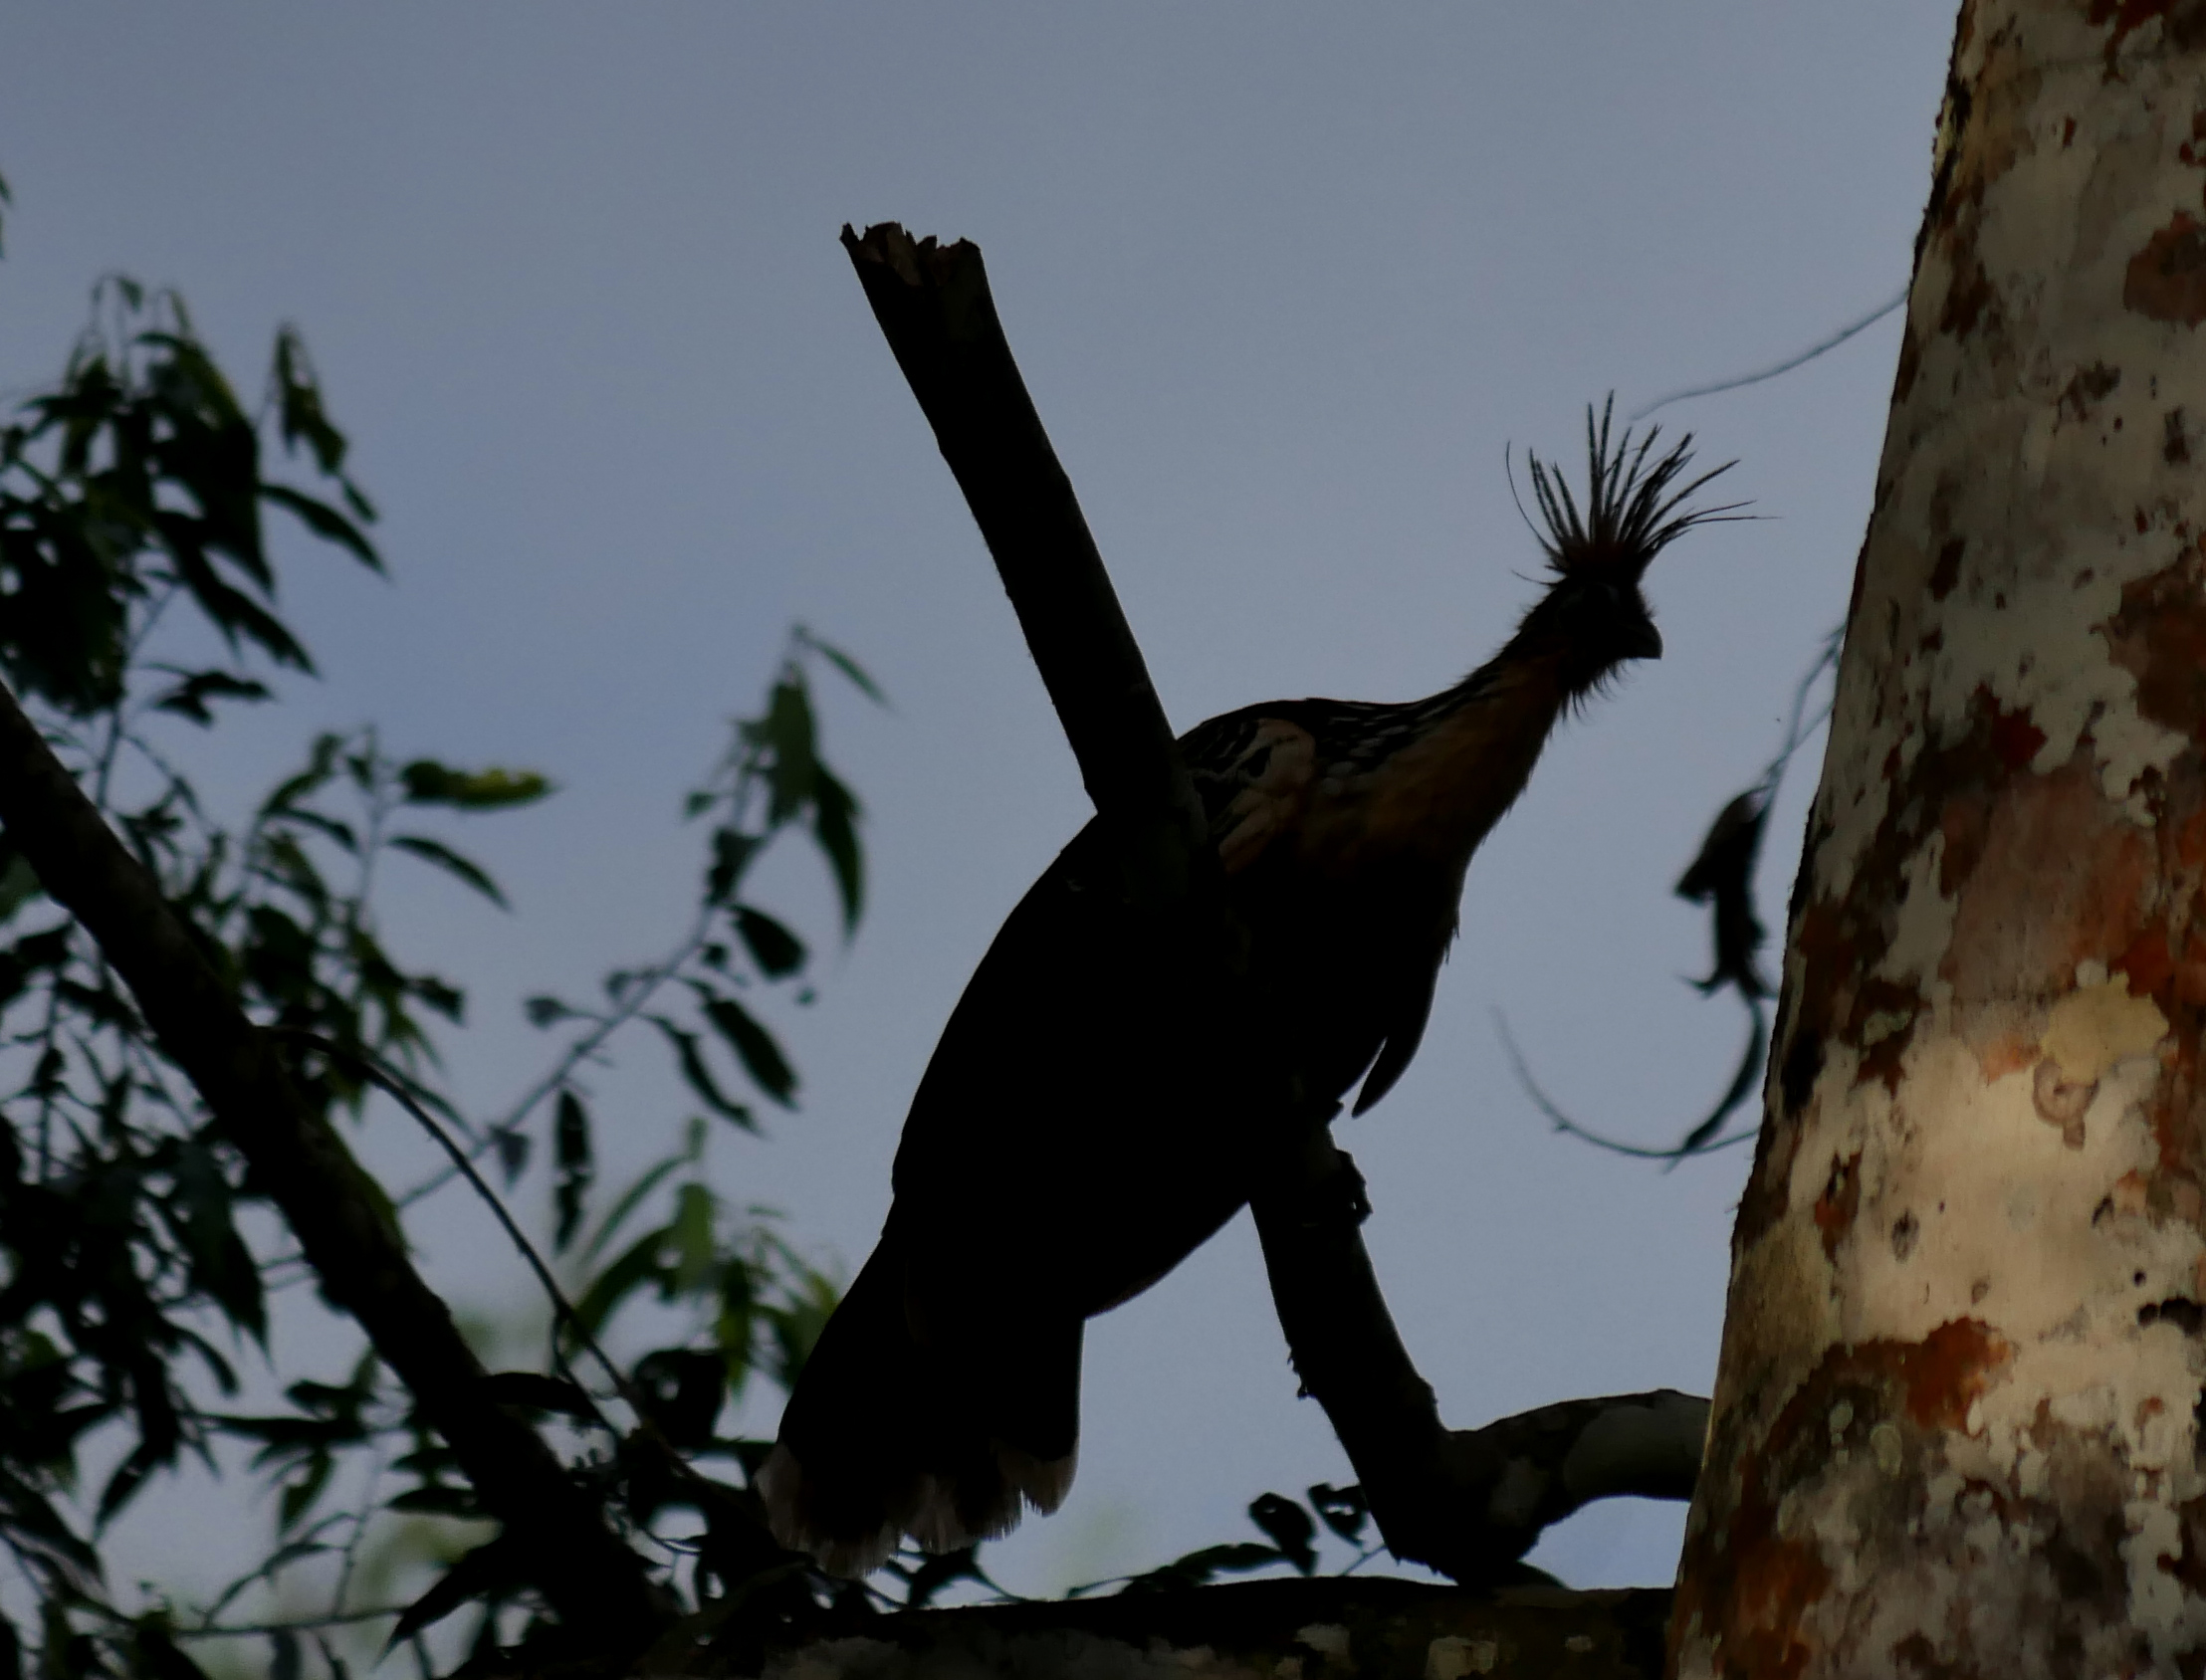 Hoatzin is a bizarre bird, eats leaves, social brooders, ancient bird group.